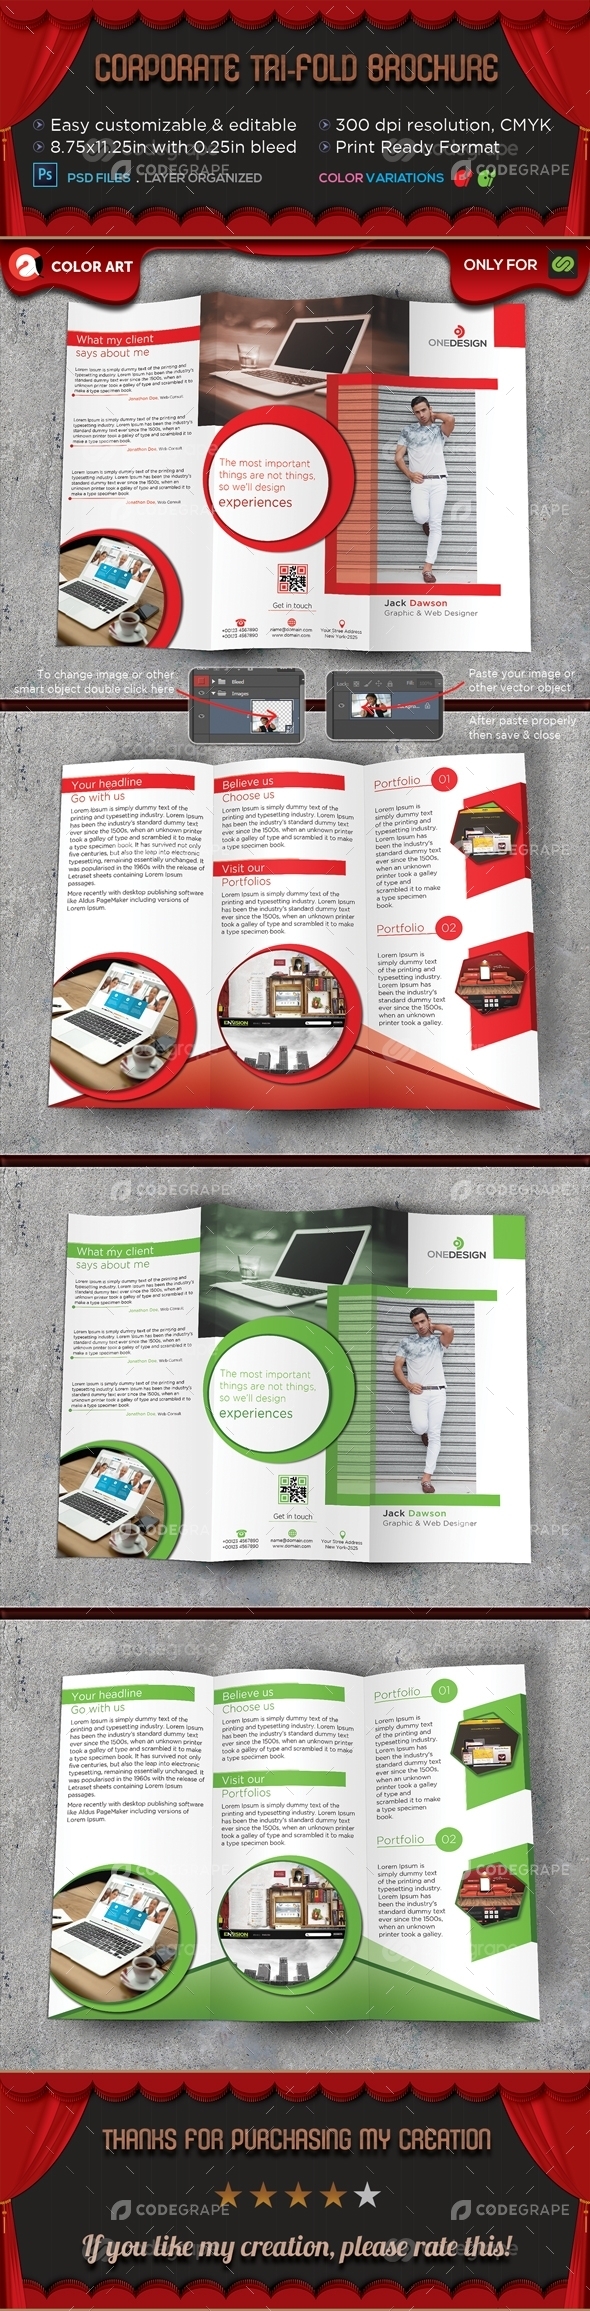 Corporate Tri-fold Brochure V.2